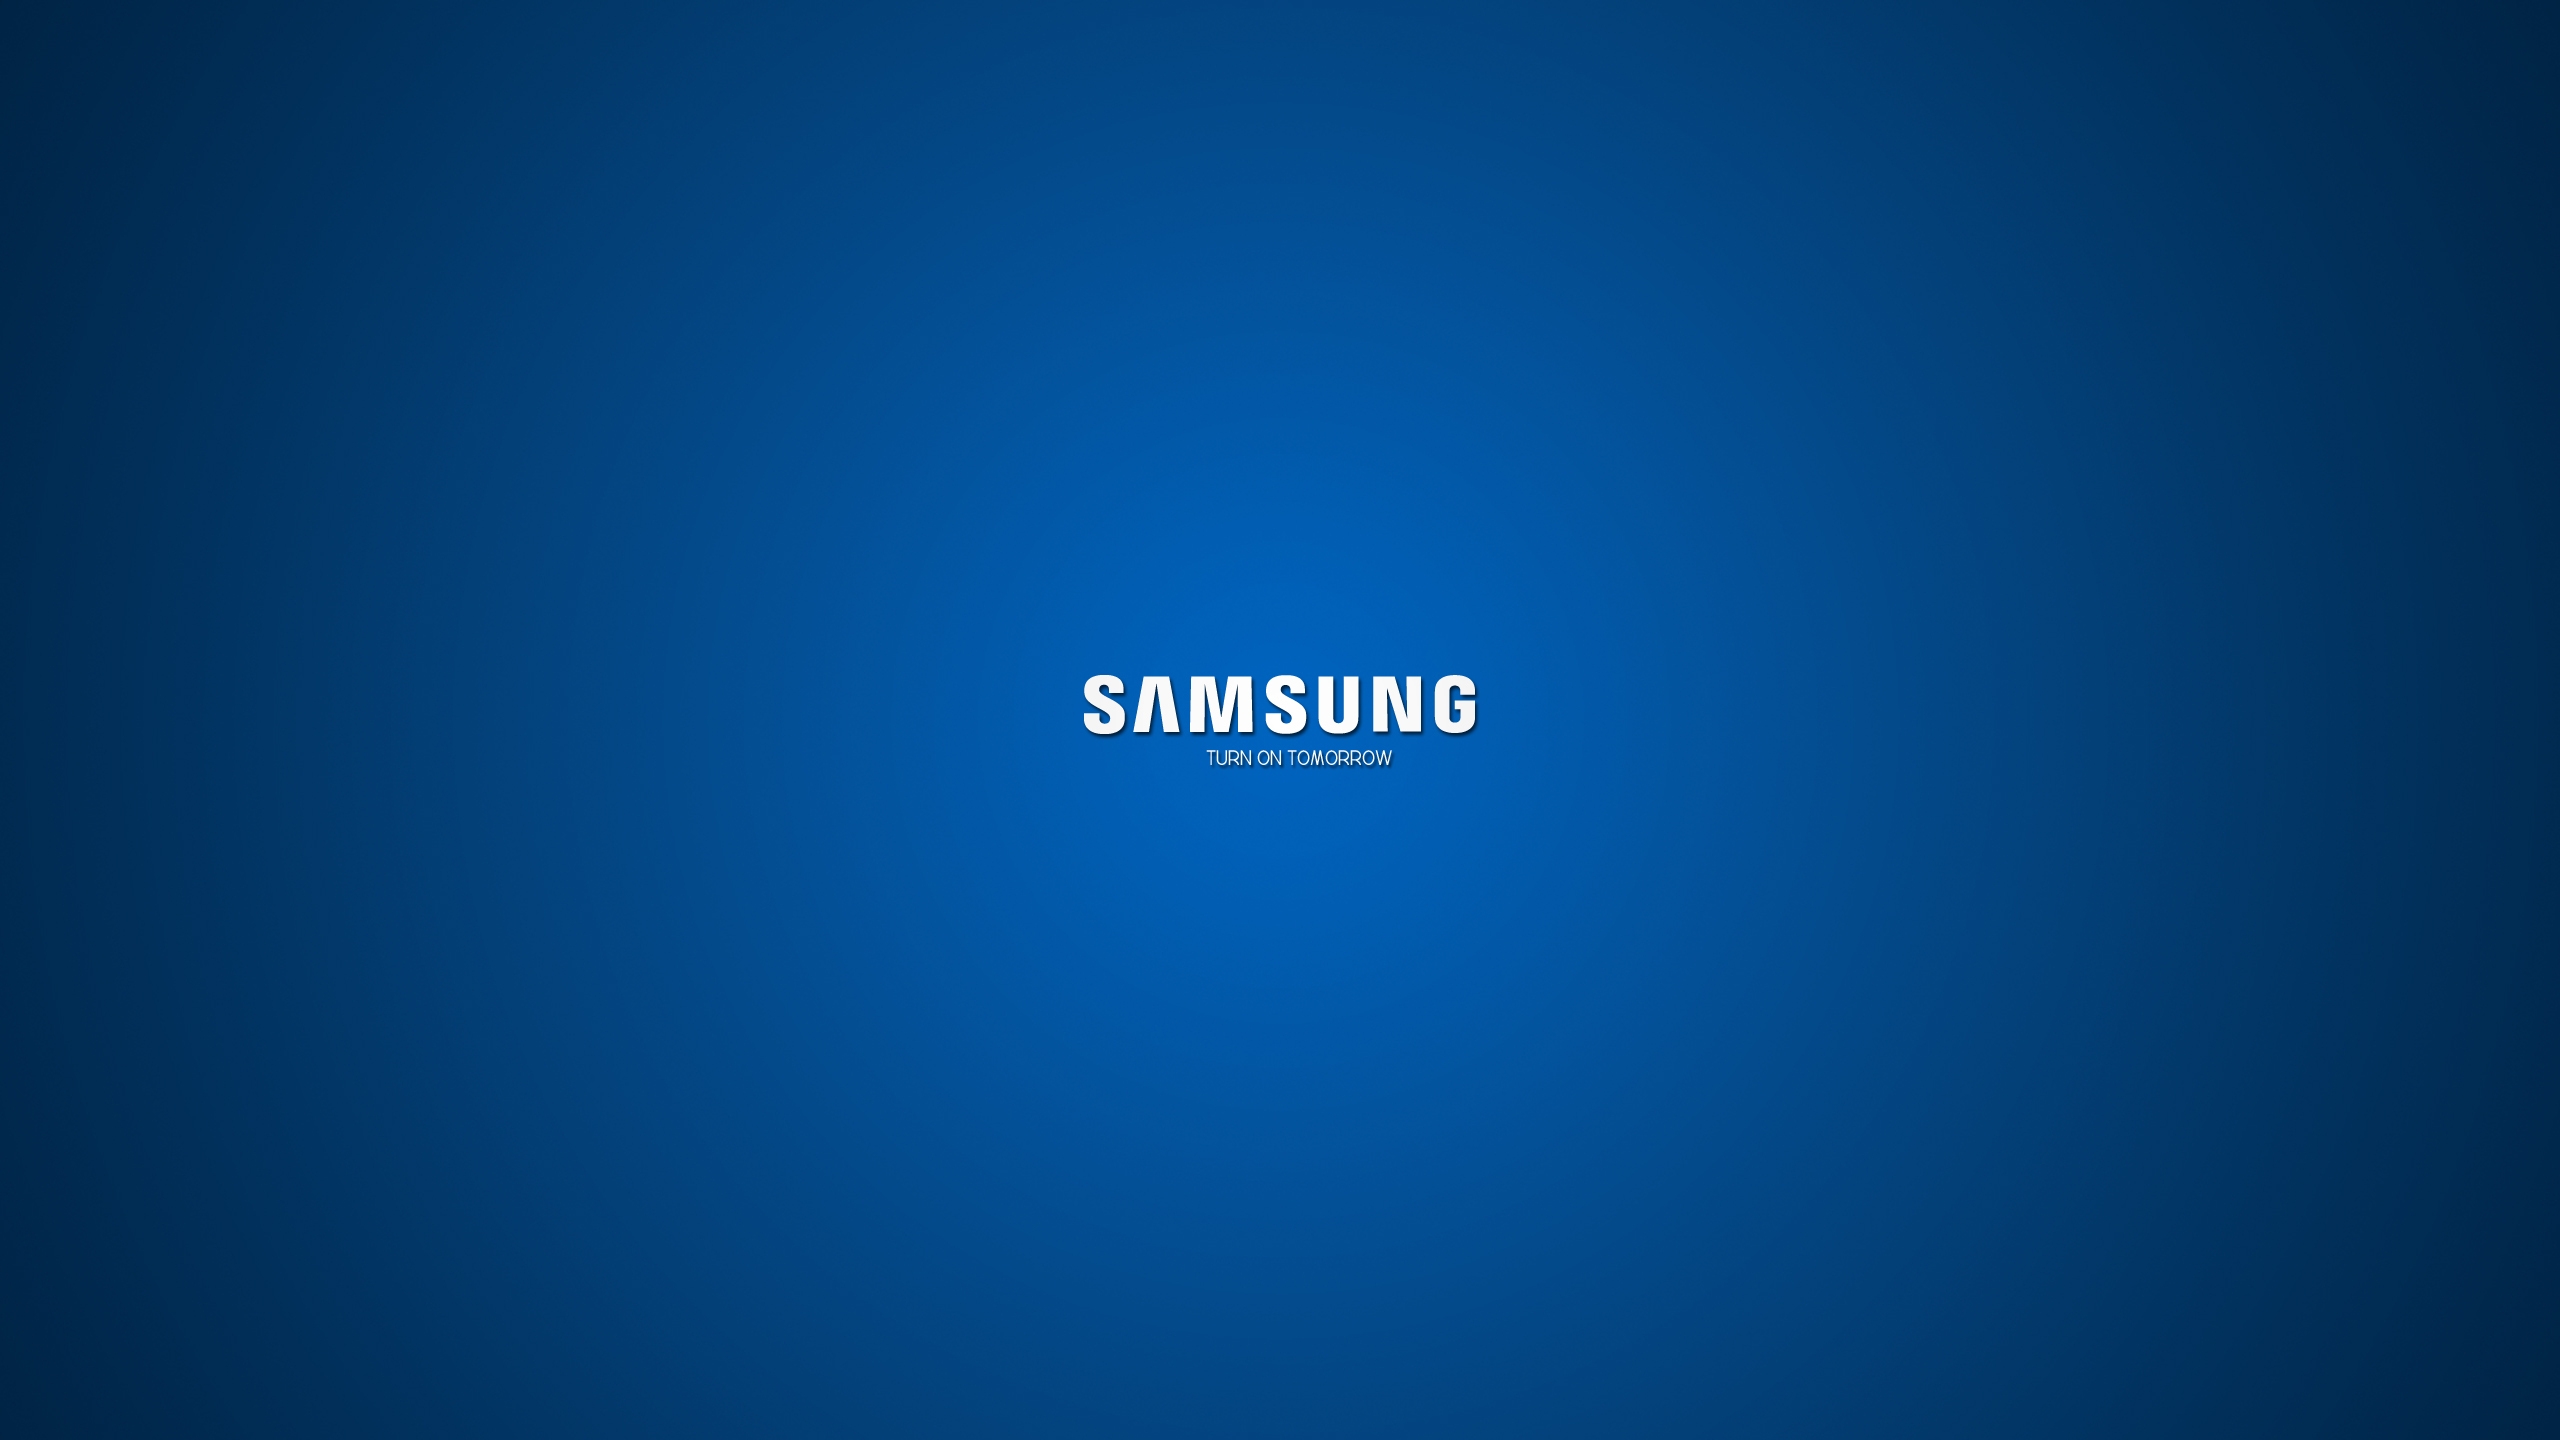 Samsung for 2560x1440 HDTV resolution